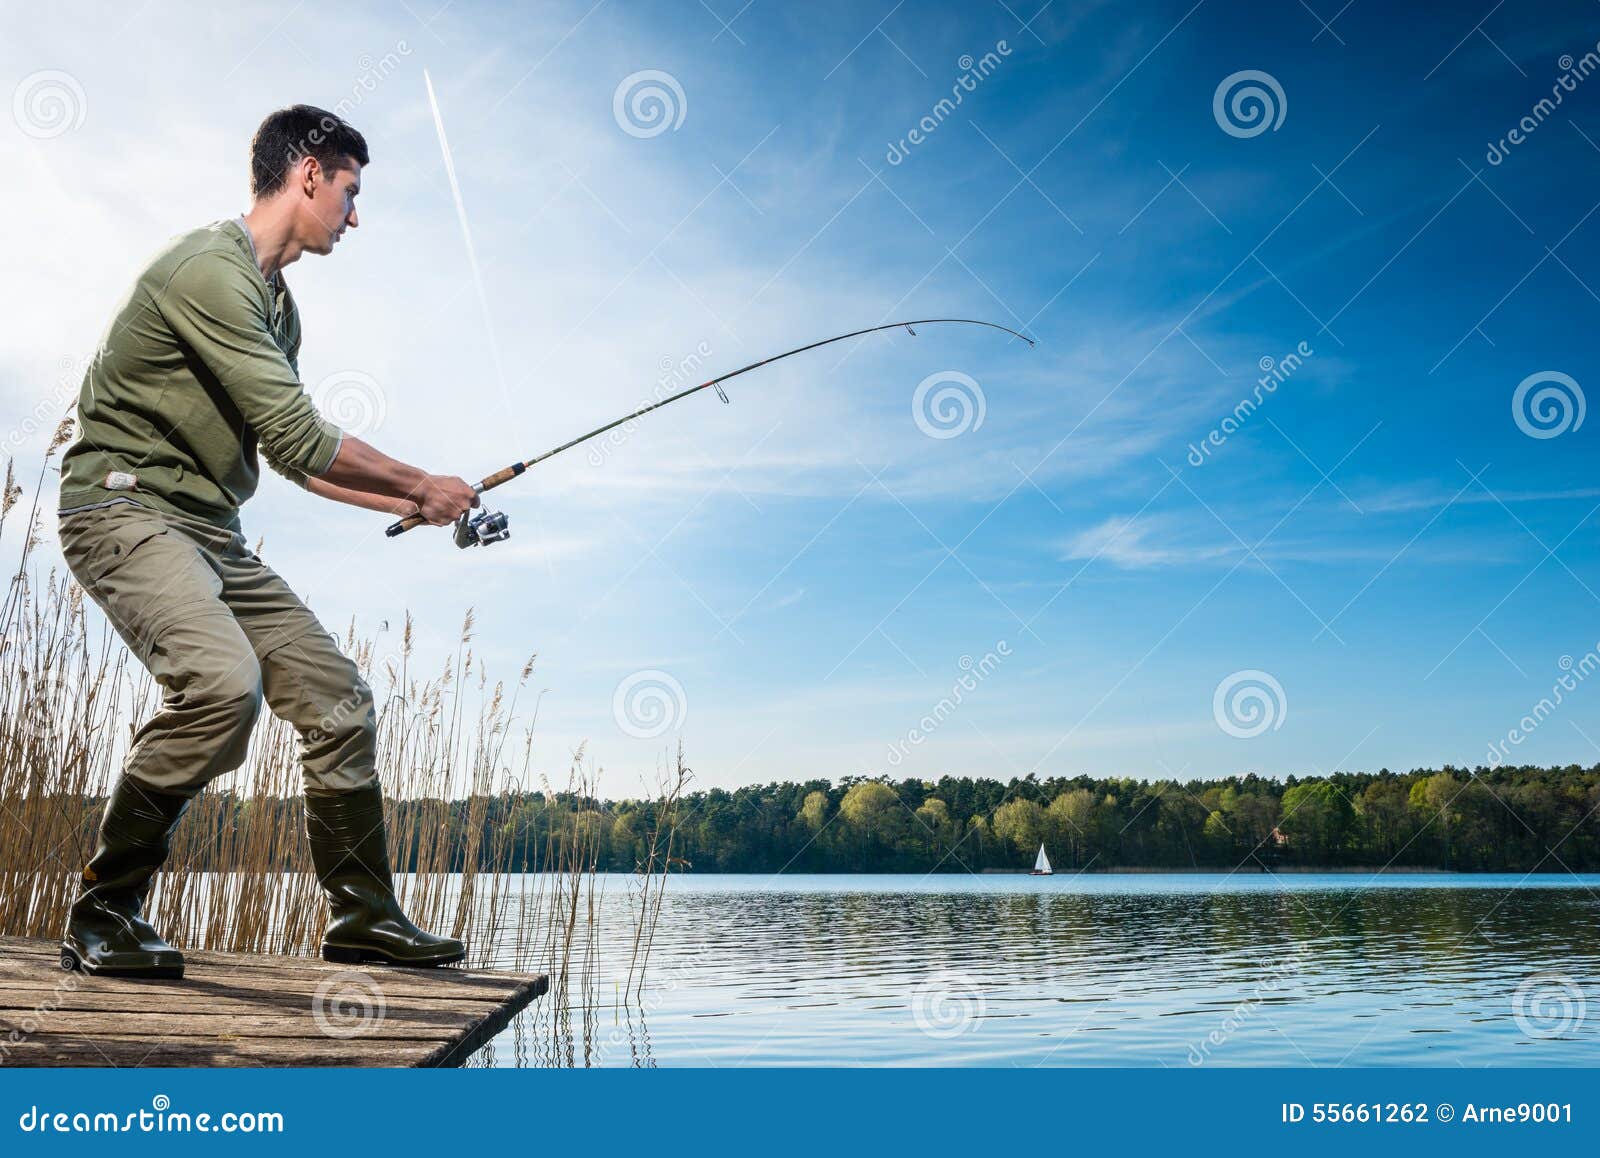 fisherman catching fish angling at the lake